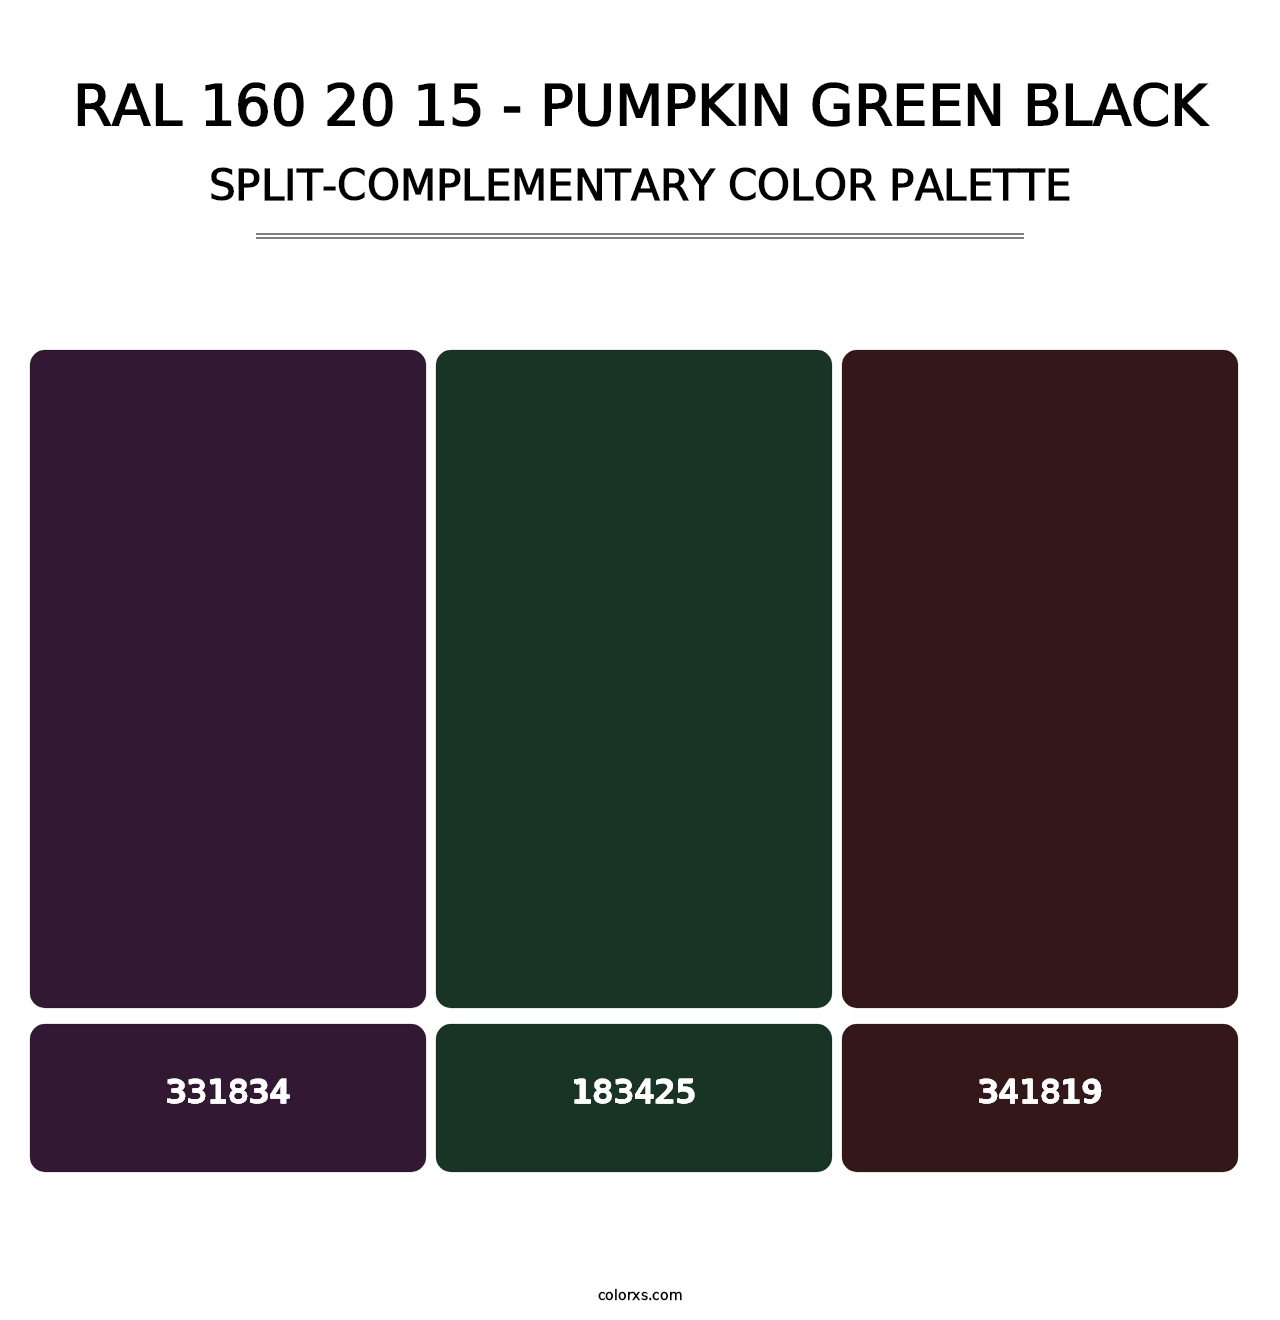 RAL 160 20 15 - Pumpkin Green Black - Split-Complementary Color Palette